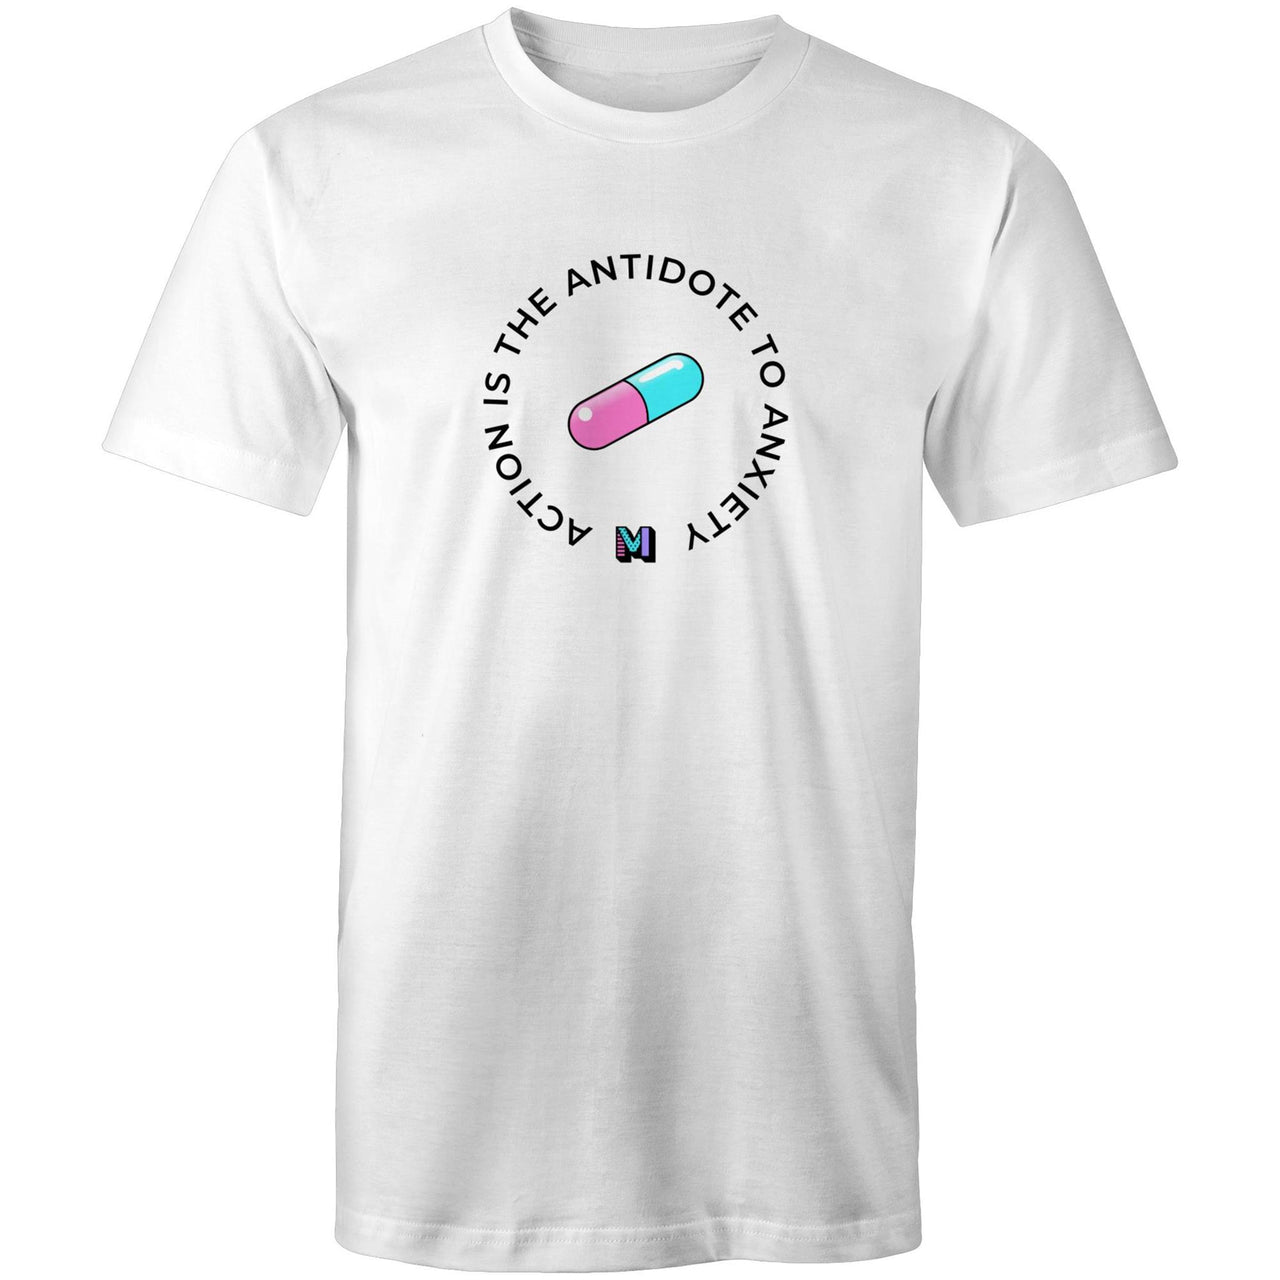 Antidote Crew T-Shirt | The Misfit Hub White